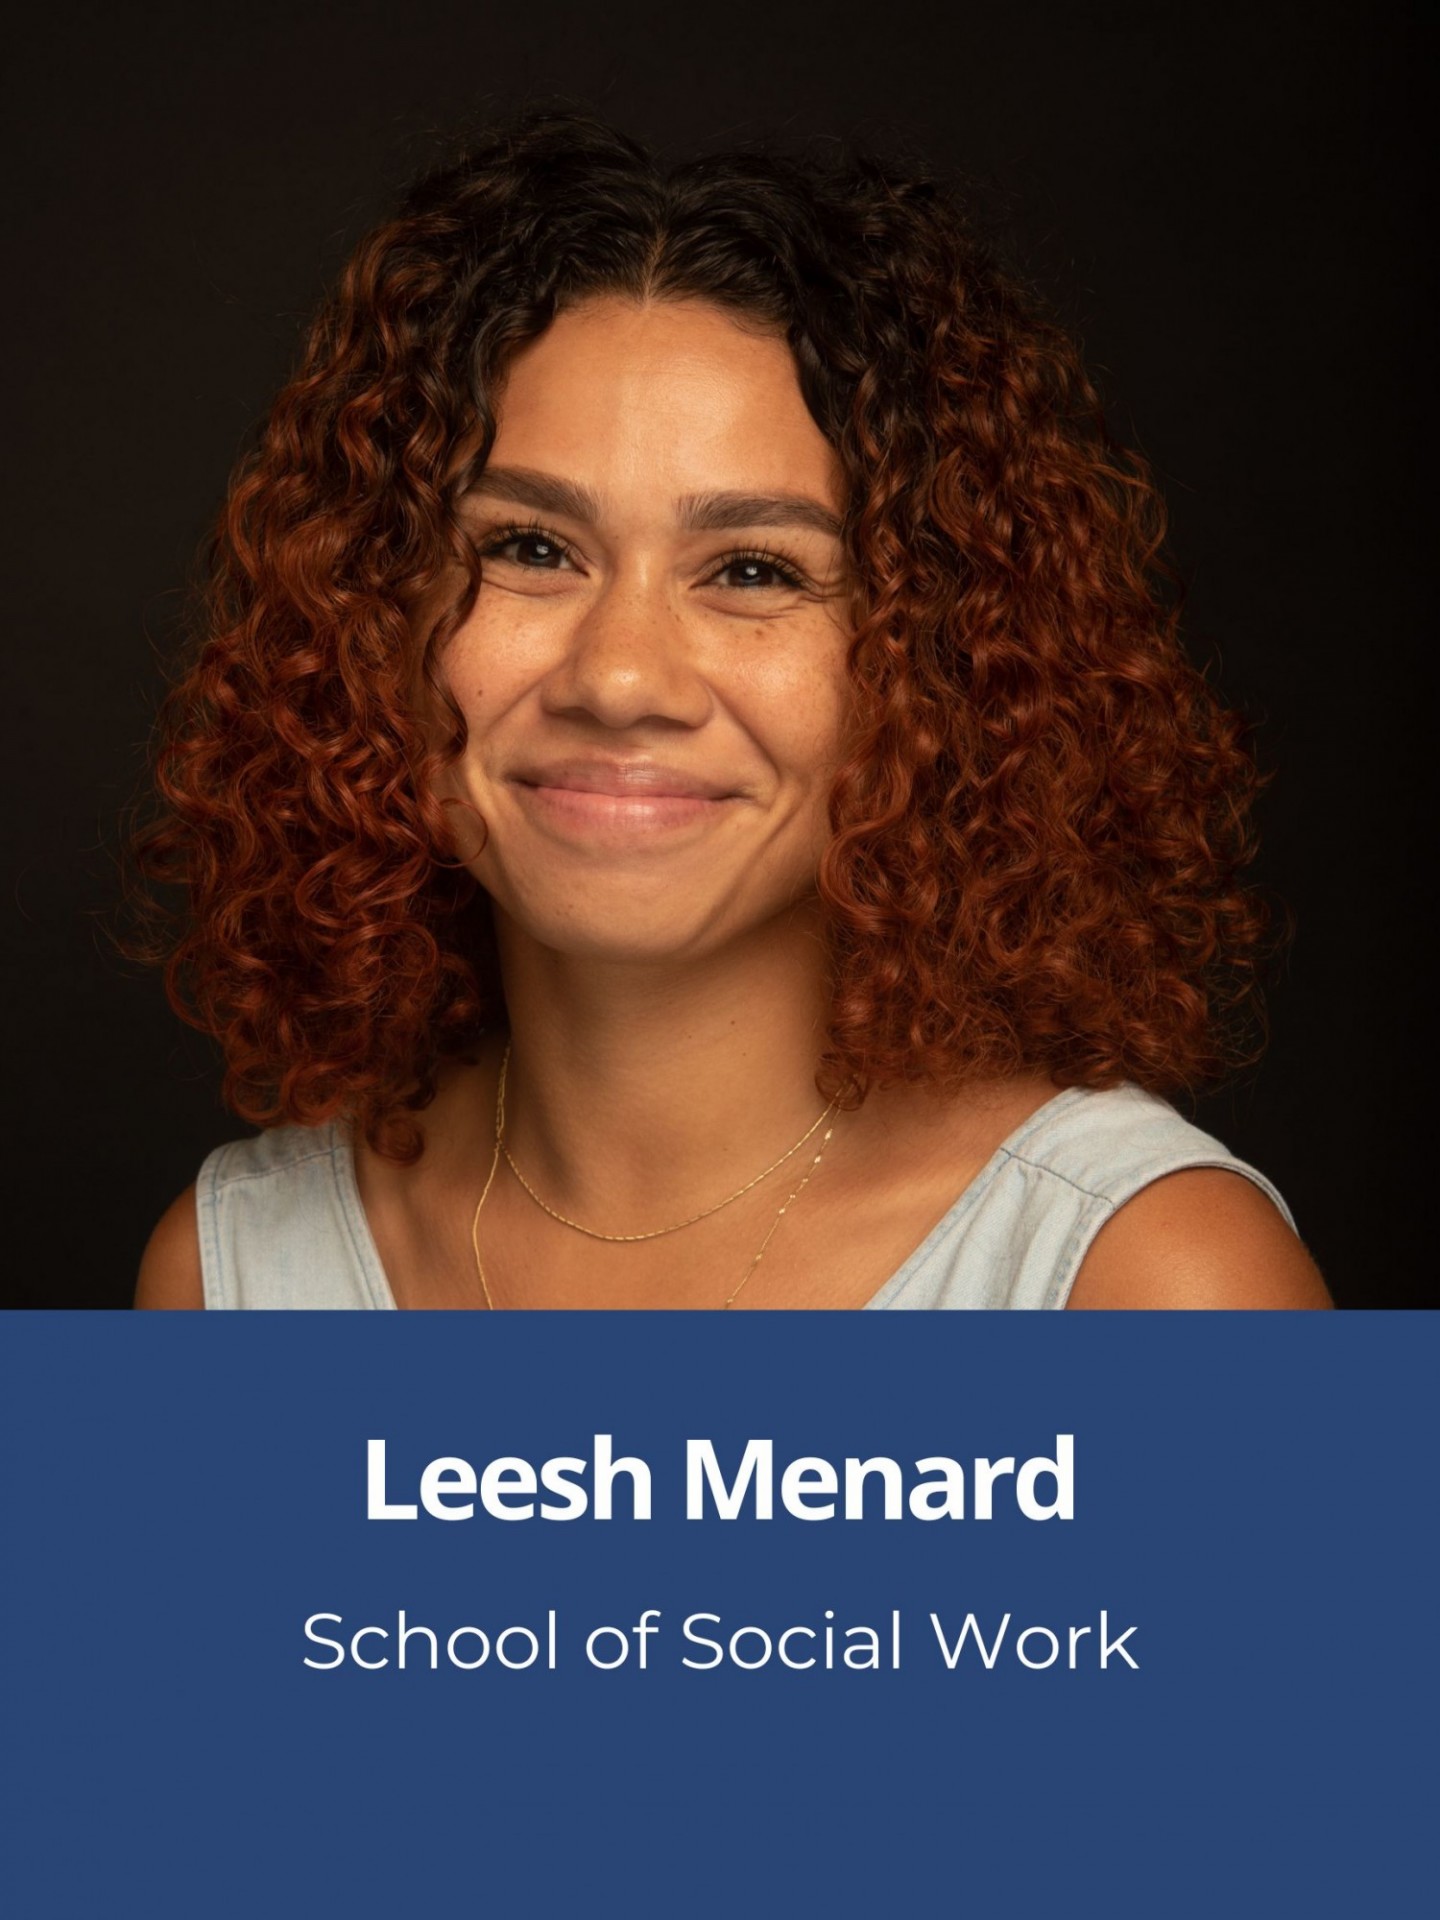 Headshot of Leesh Menard